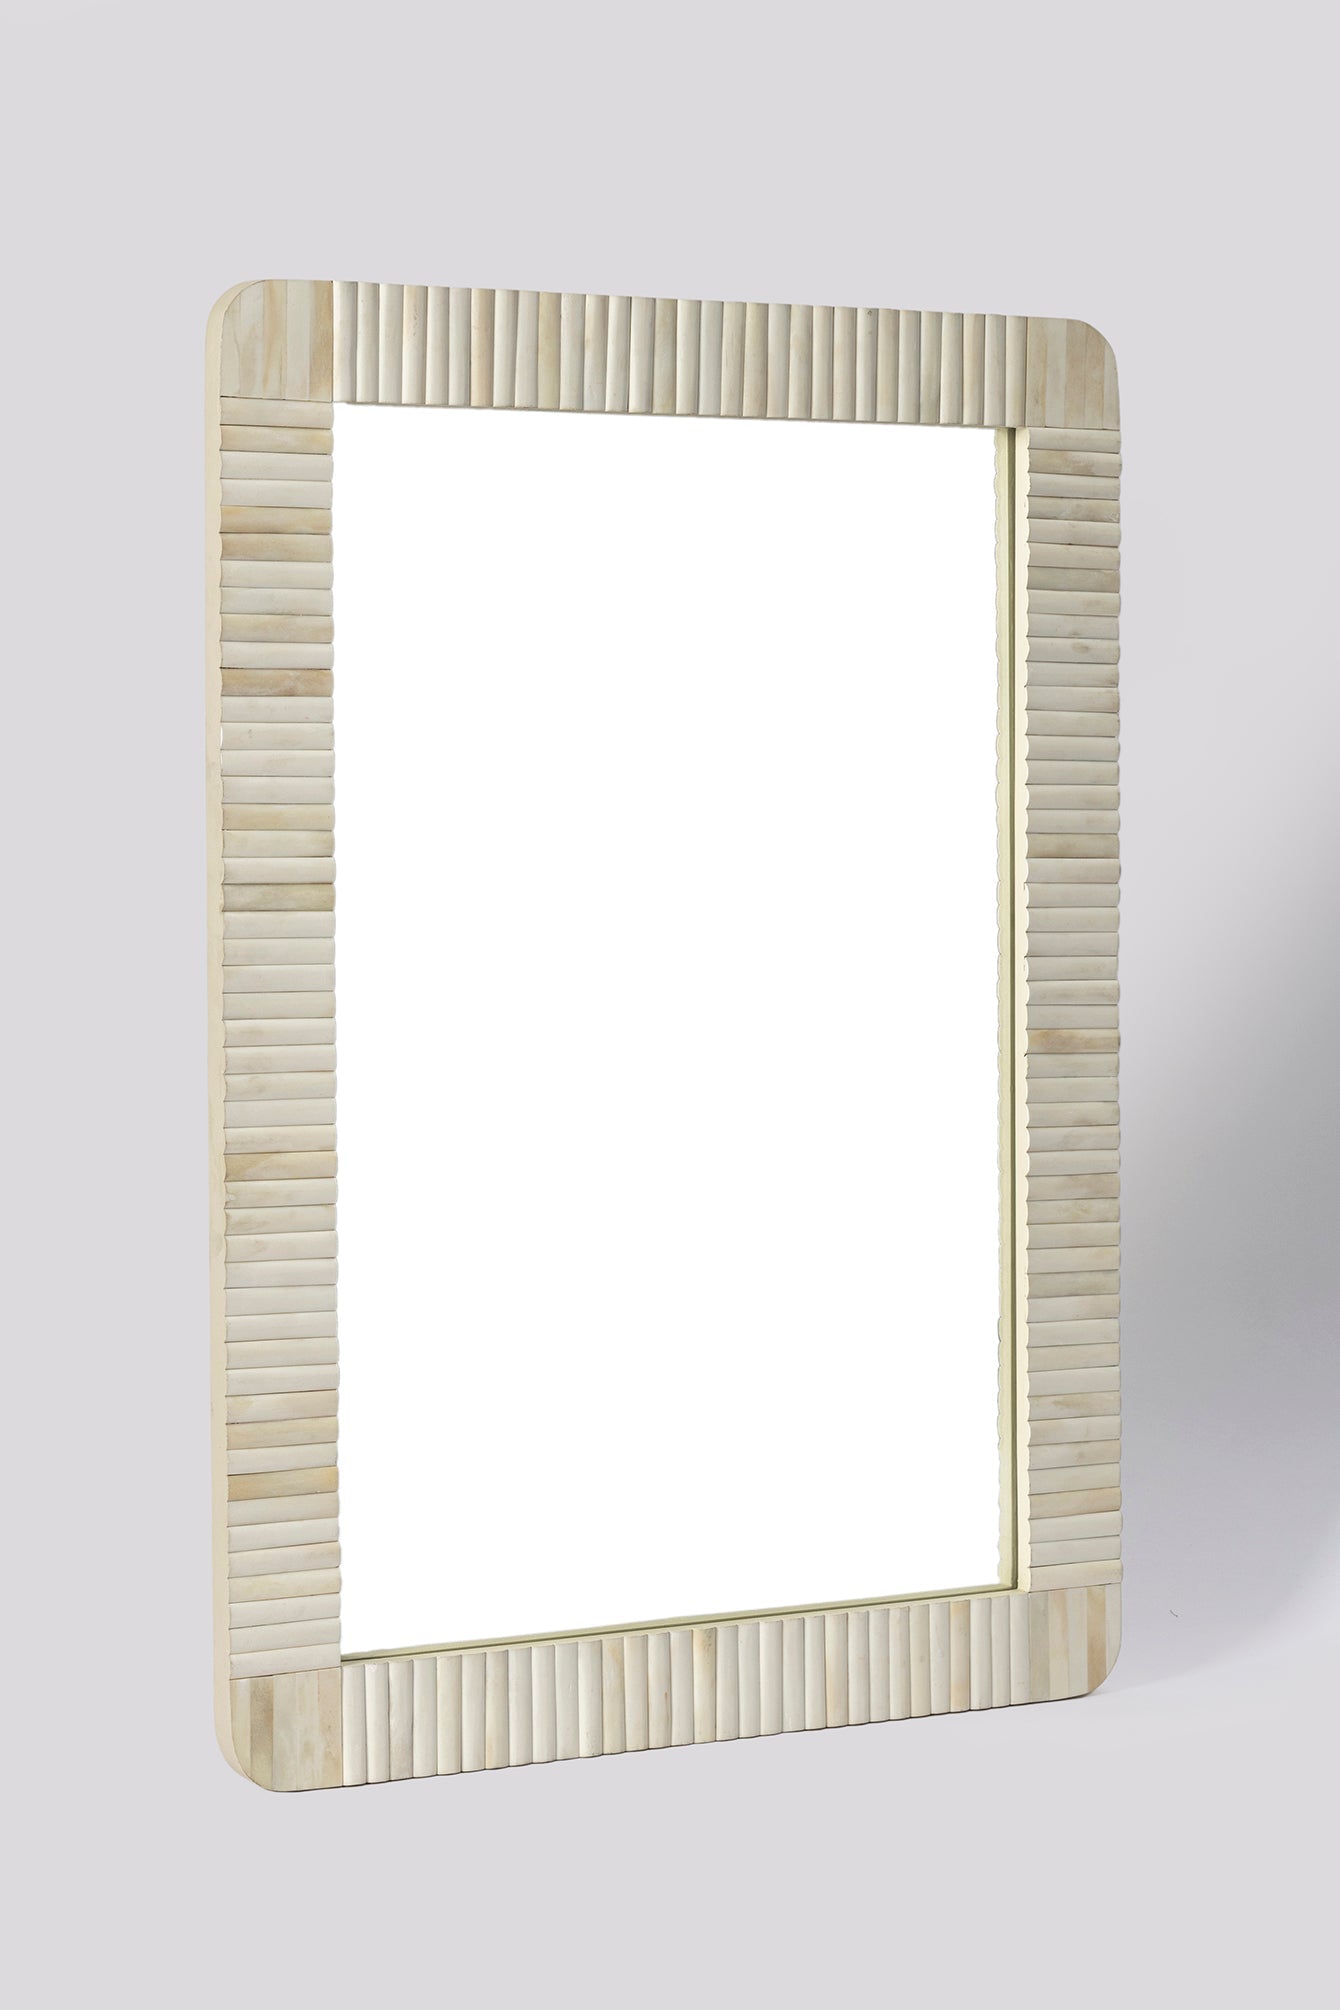 Jarve Wooden Bone Inlay Mirror Frame With Mirror